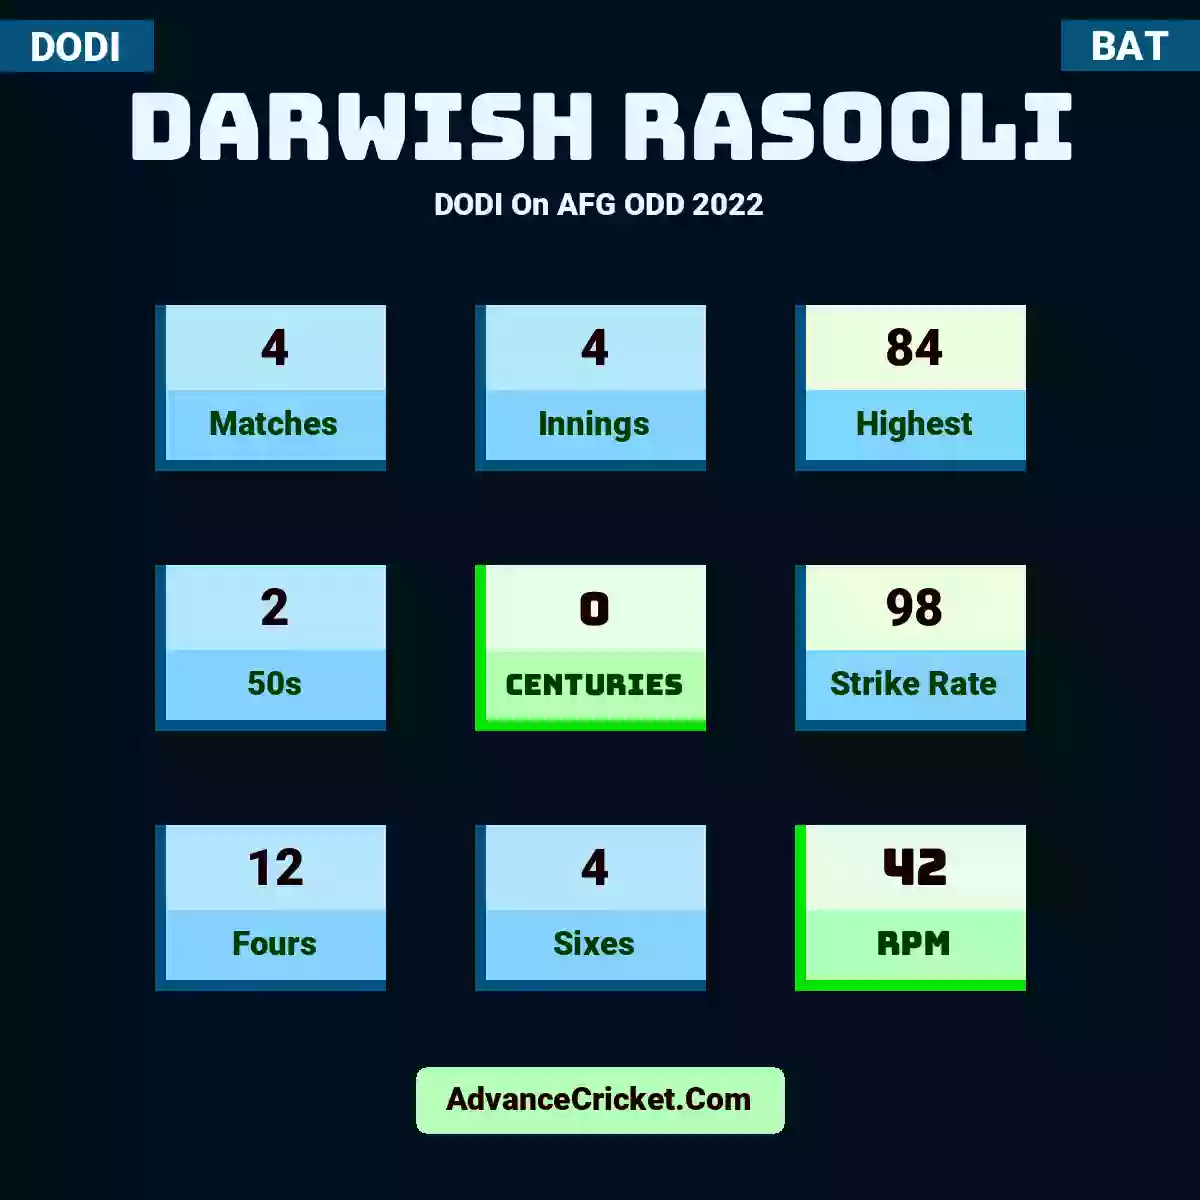 Darwish Rasooli DODI  On AFG ODD 2022, Darwish Rasooli played 4 matches, scored 84 runs as highest, 2 half-centuries, and 0 centuries, with a strike rate of 98. D.Rasooli hit 12 fours and 4 sixes, with an RPM of 42.